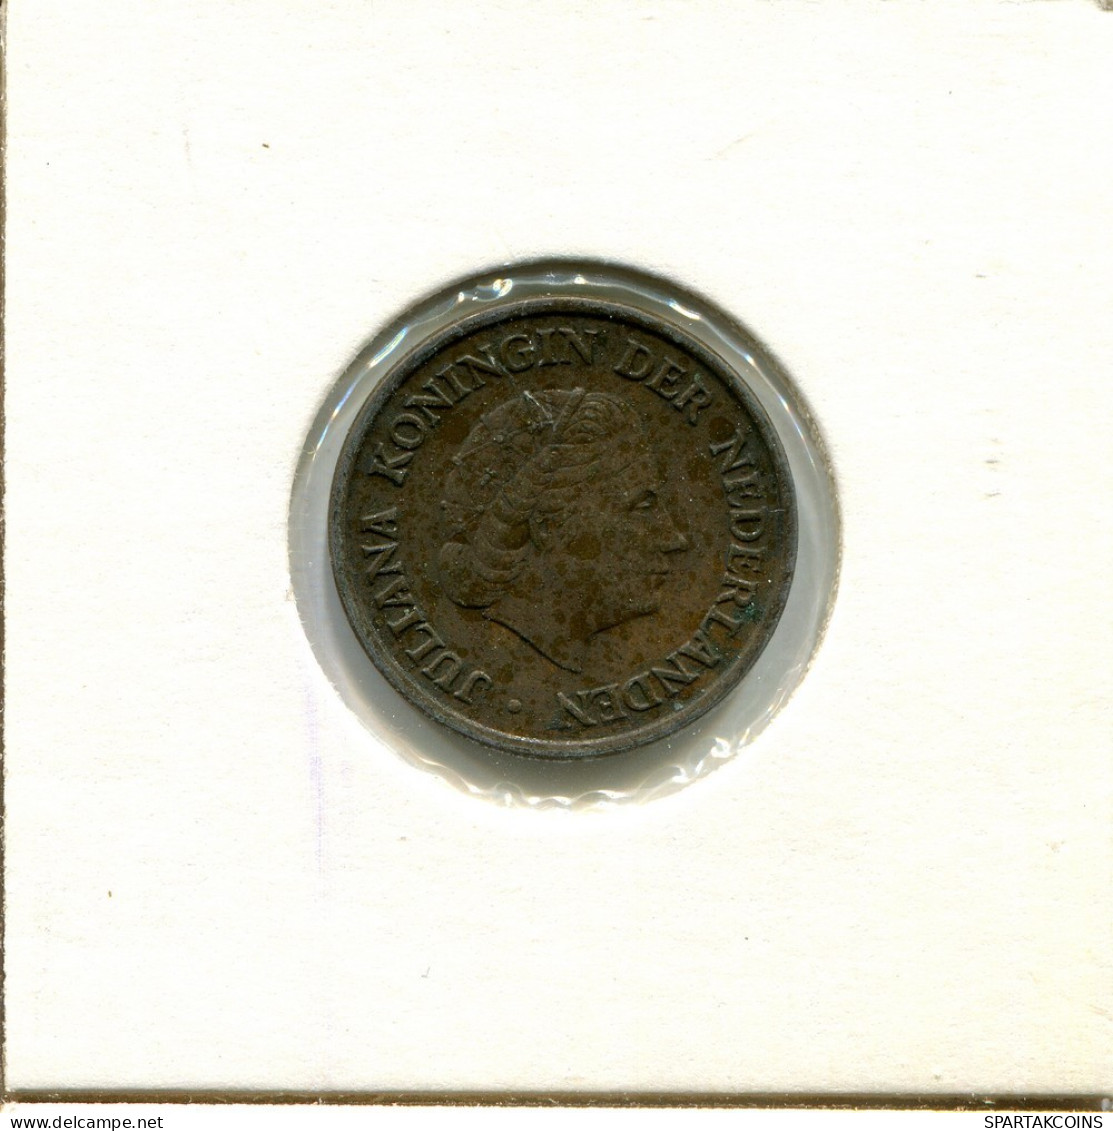 5 CENTS 1954 NEERLANDÉS NETHERLANDS Moneda #AU457.E.A - 1948-1980 : Juliana